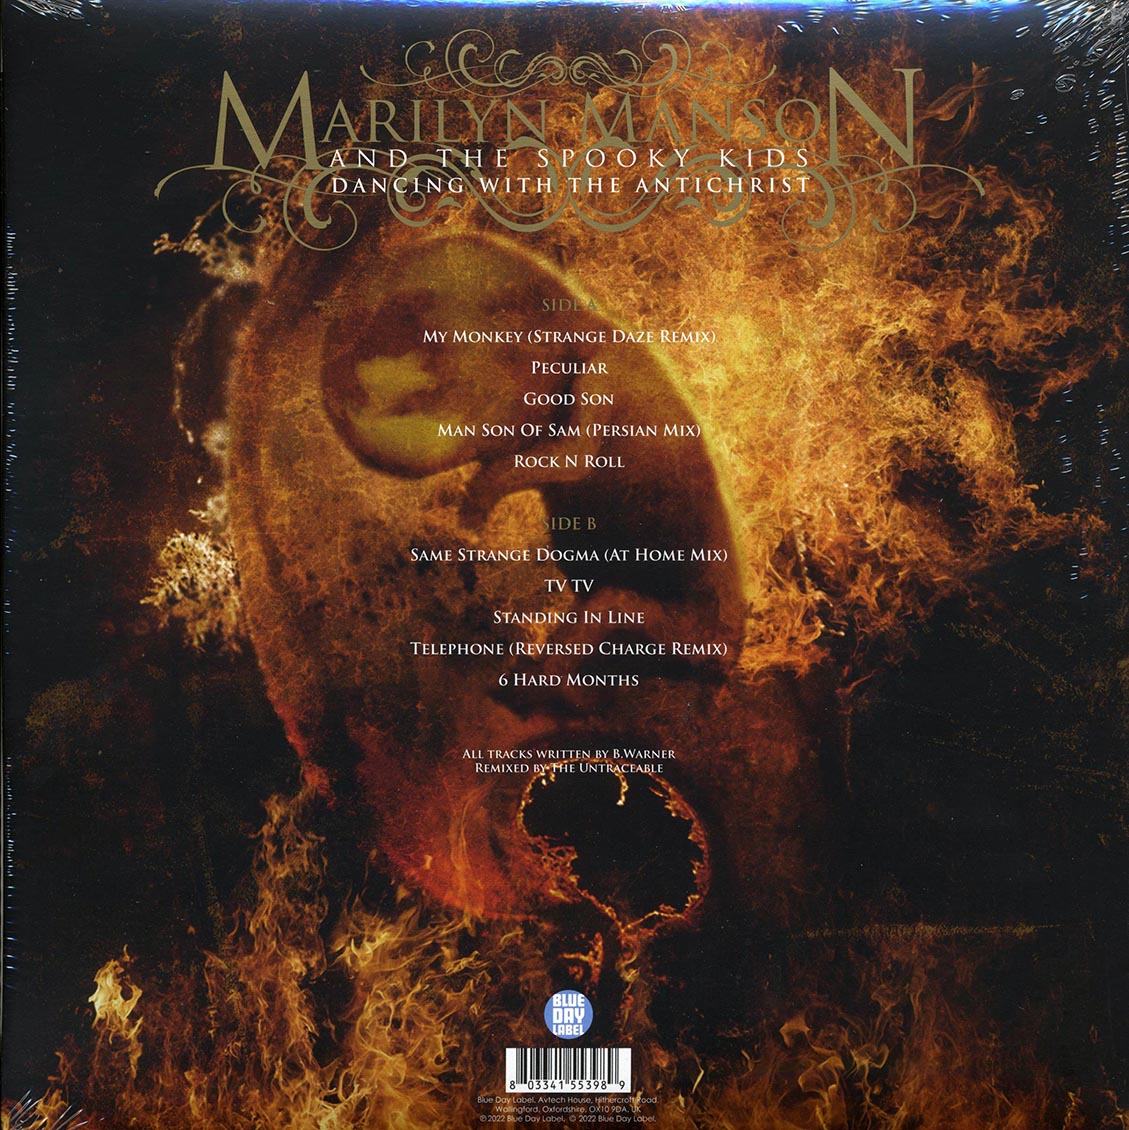 Marilyn Manson & The Spooky Kids - Dancing With The Antichrist (ltd. ed.) (colored vinyl) - Vinyl LP, LP